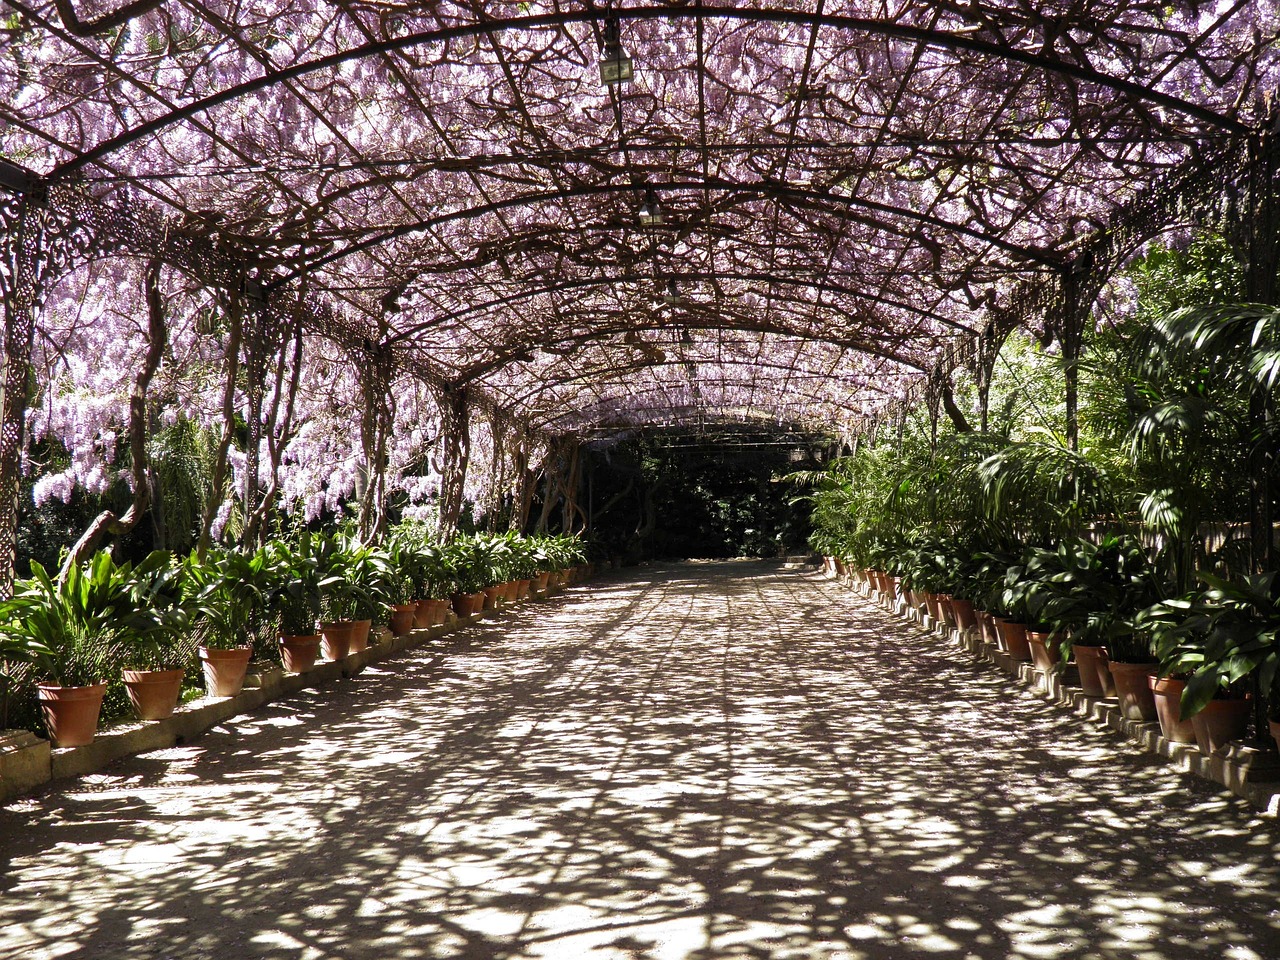 Descubre el maravilloso jardín botánico de Málaga